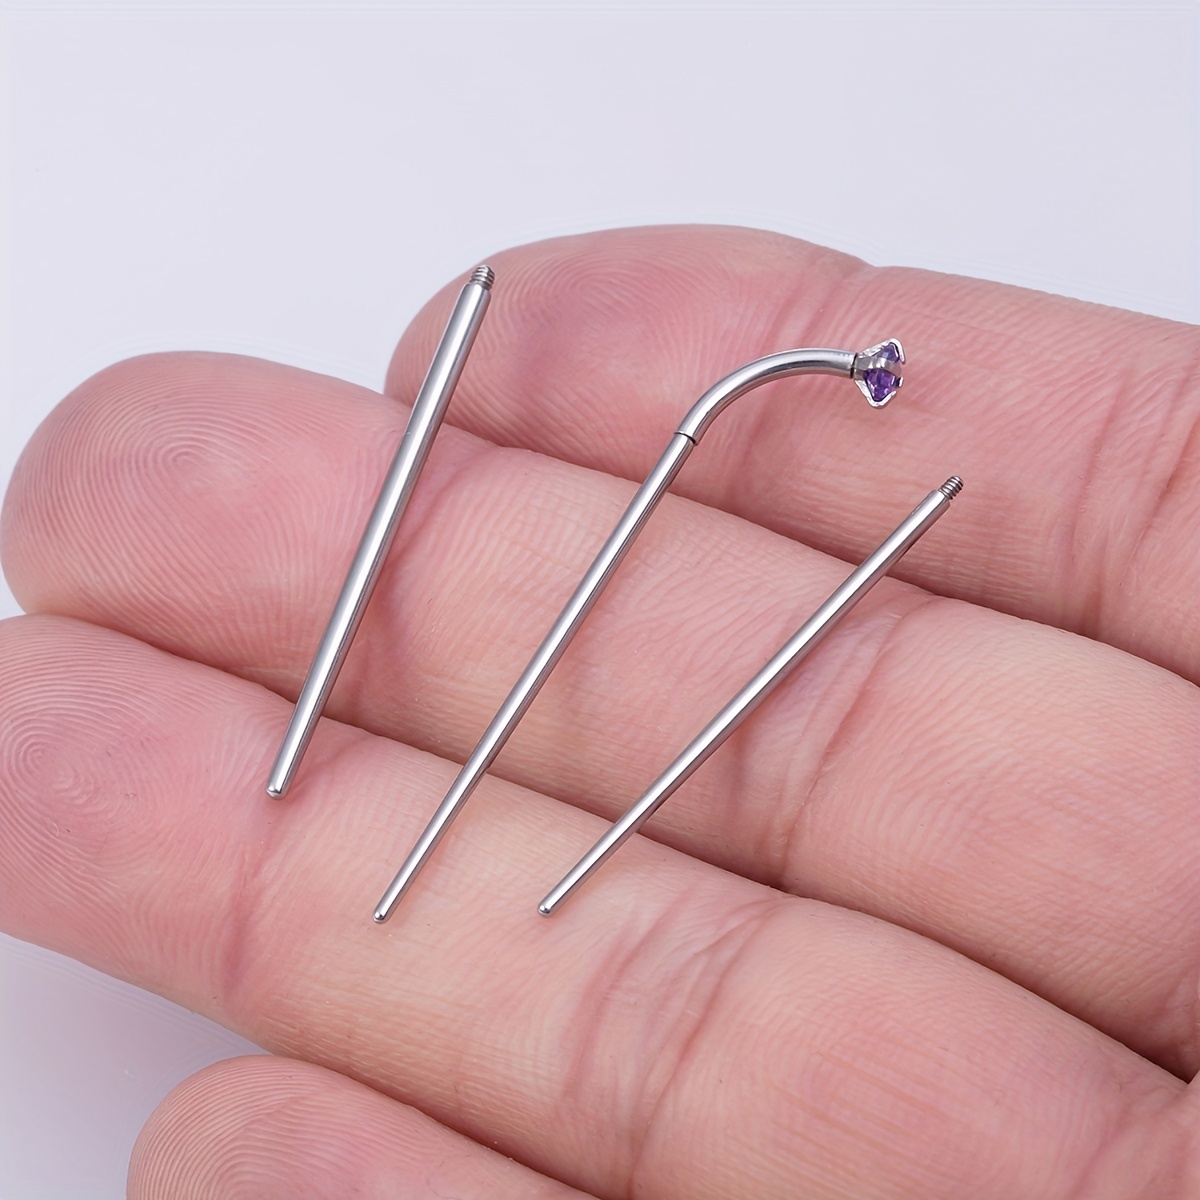 Taper Piercing Pins